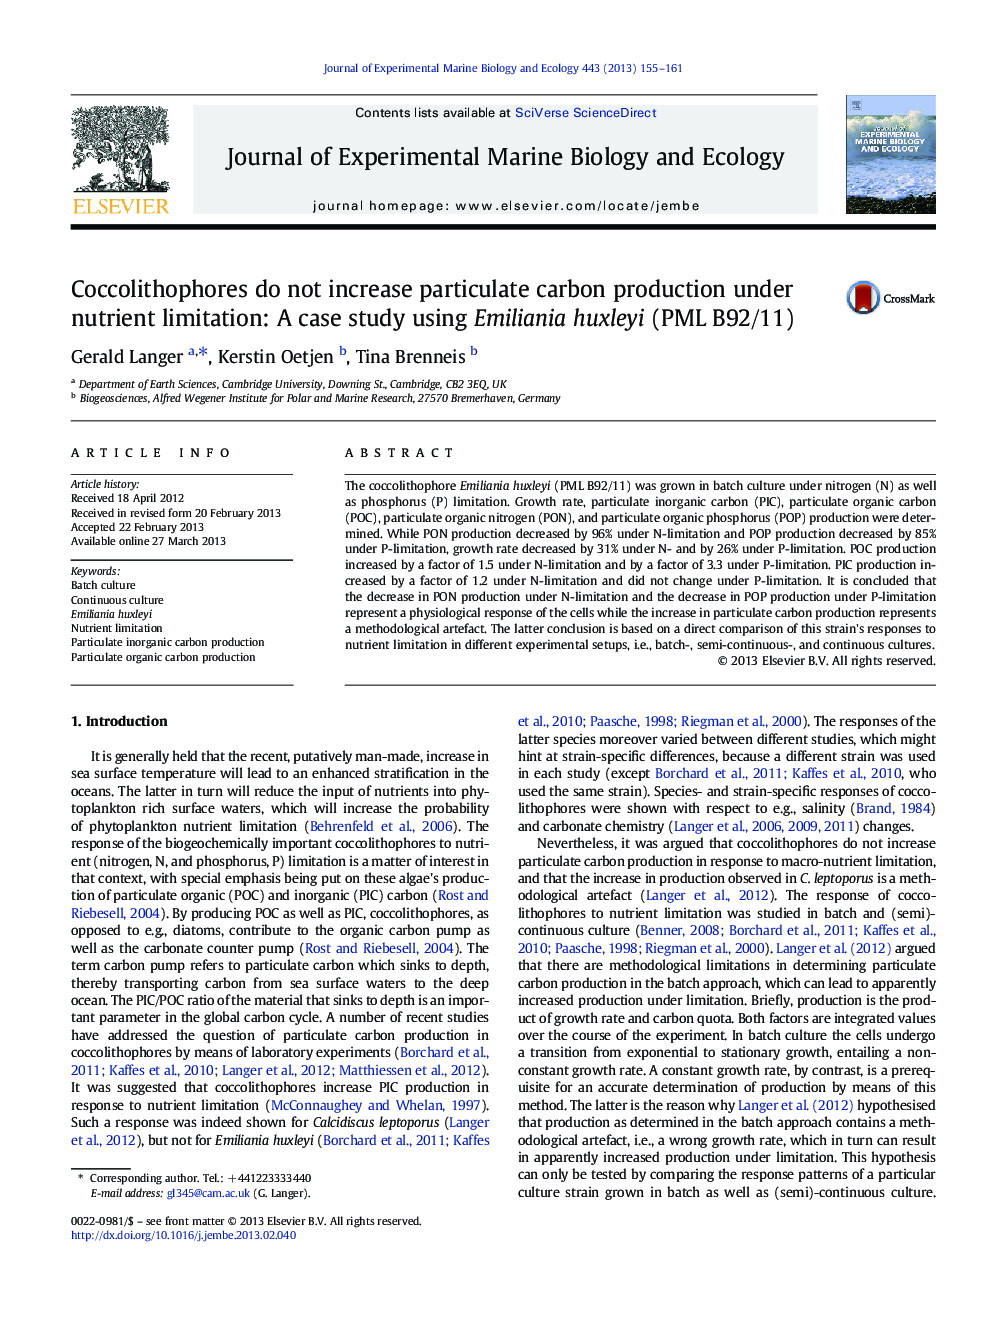 Coccolithophores do not increase particulate carbon production under nutrient limitation: A case study using Emiliania huxleyi (PML B92/11)